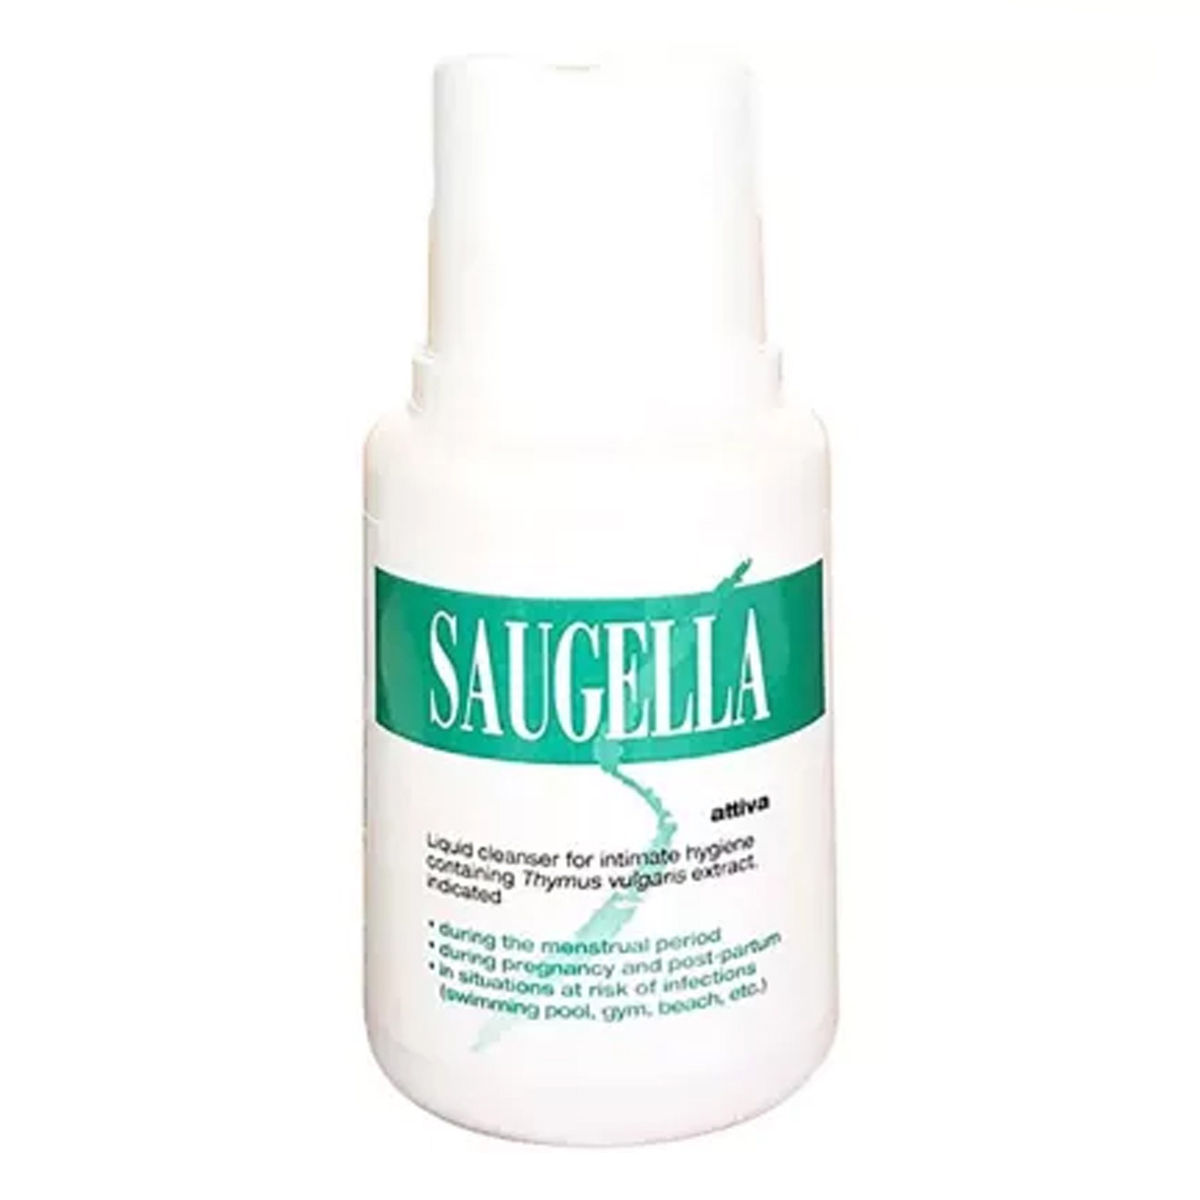 Saugella Attiva Liquid, 100 ml Price, Uses, Side Effects, Composition -  Apollo Pharmacy